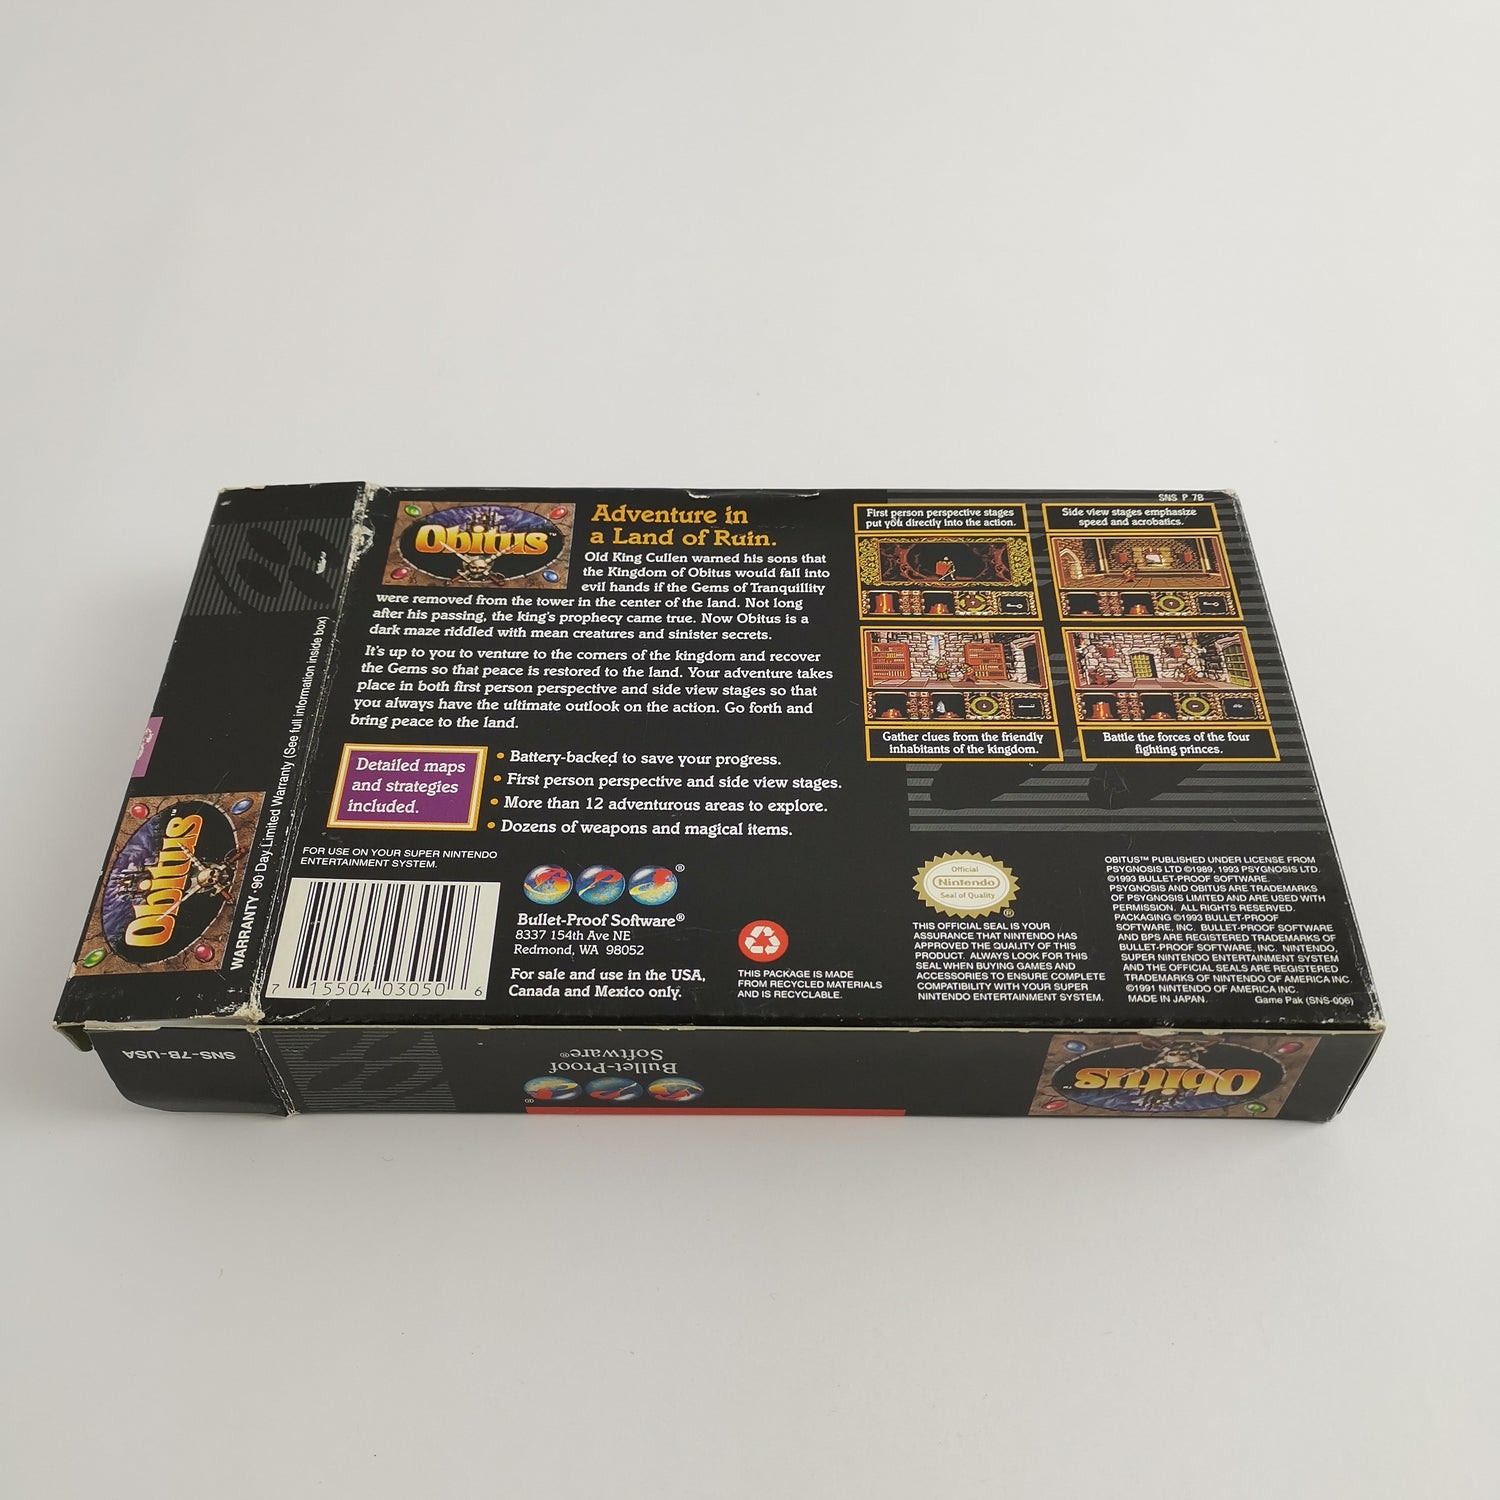 Super Nintendo Spiel : Obitus | Snes Game - OVP NTSC-U/C USA